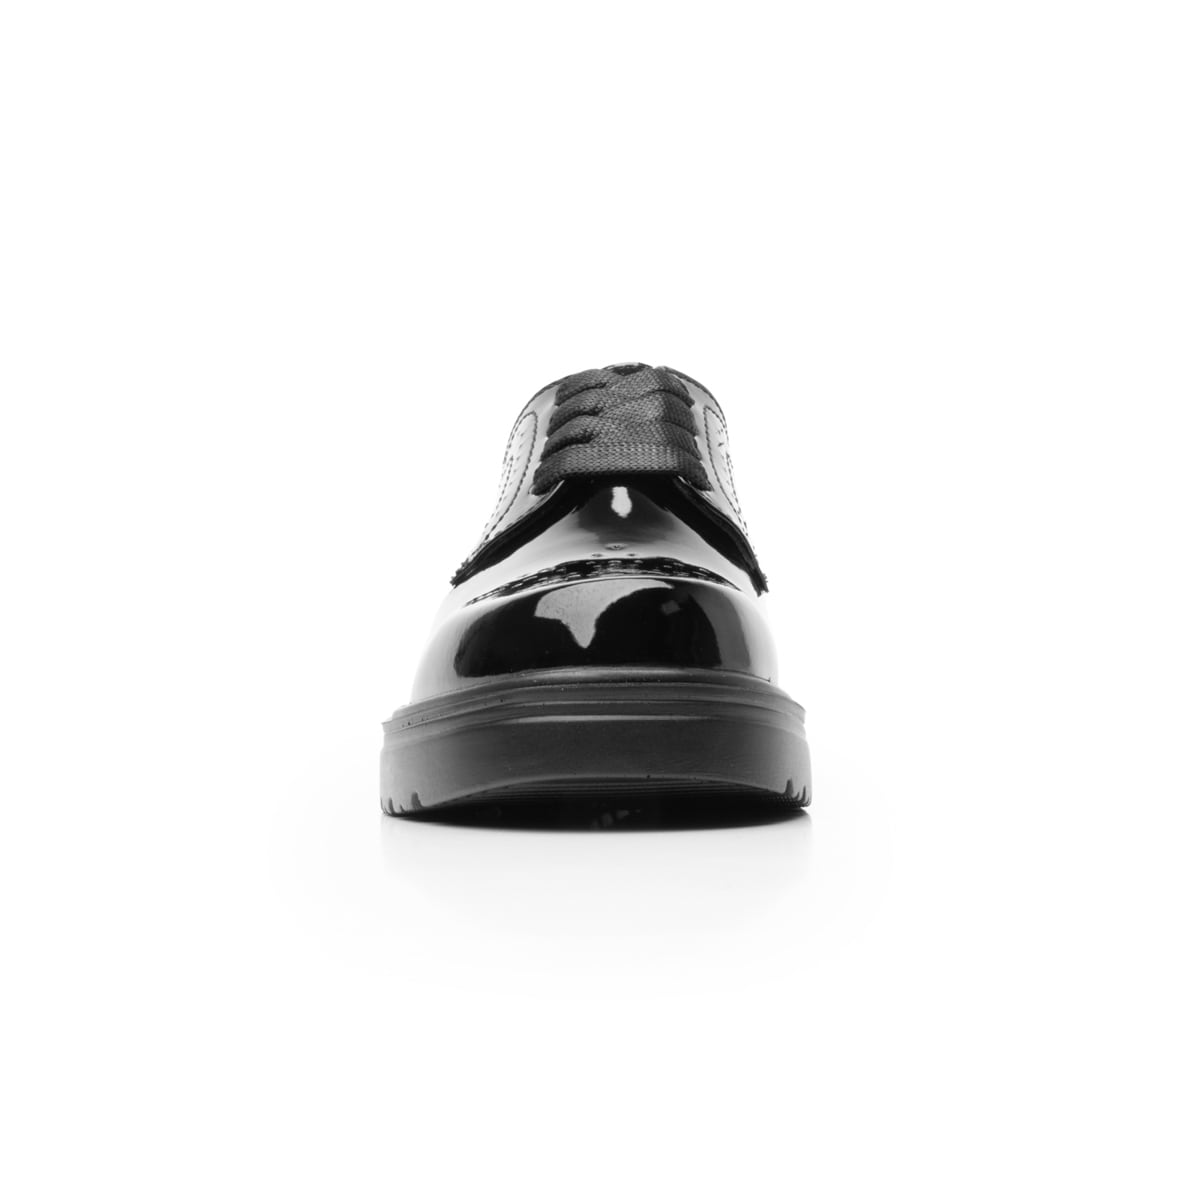 Tenis Zapatos Niño Calzado Infantil Oxford Casual Negro